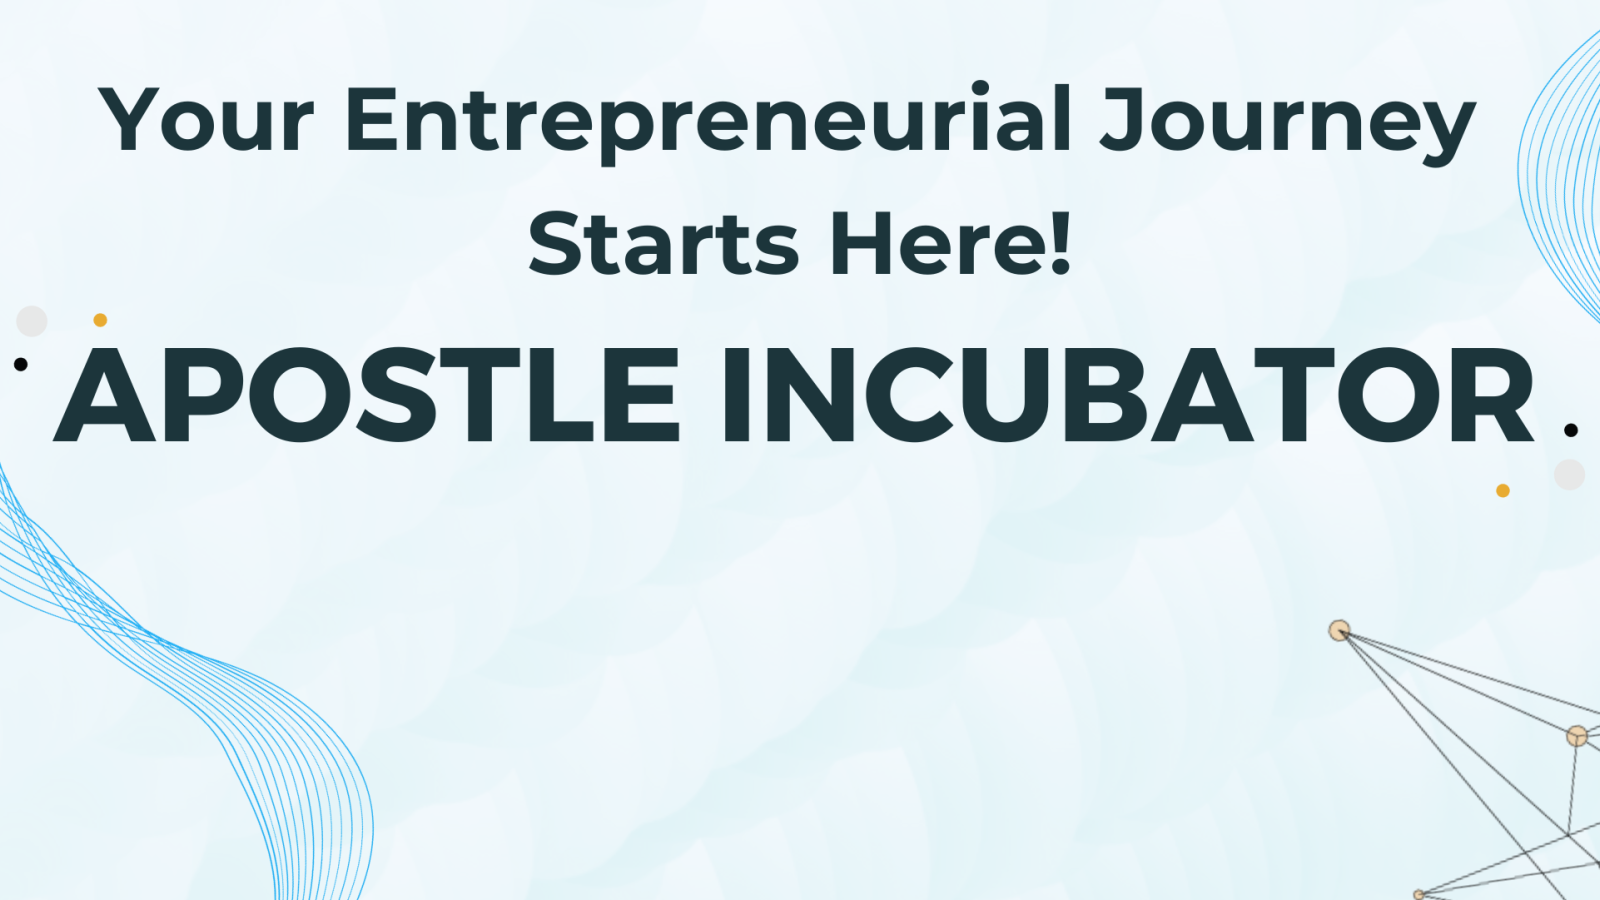 Your Entrepreneurial Journey Starts Here! Apostle Incubator